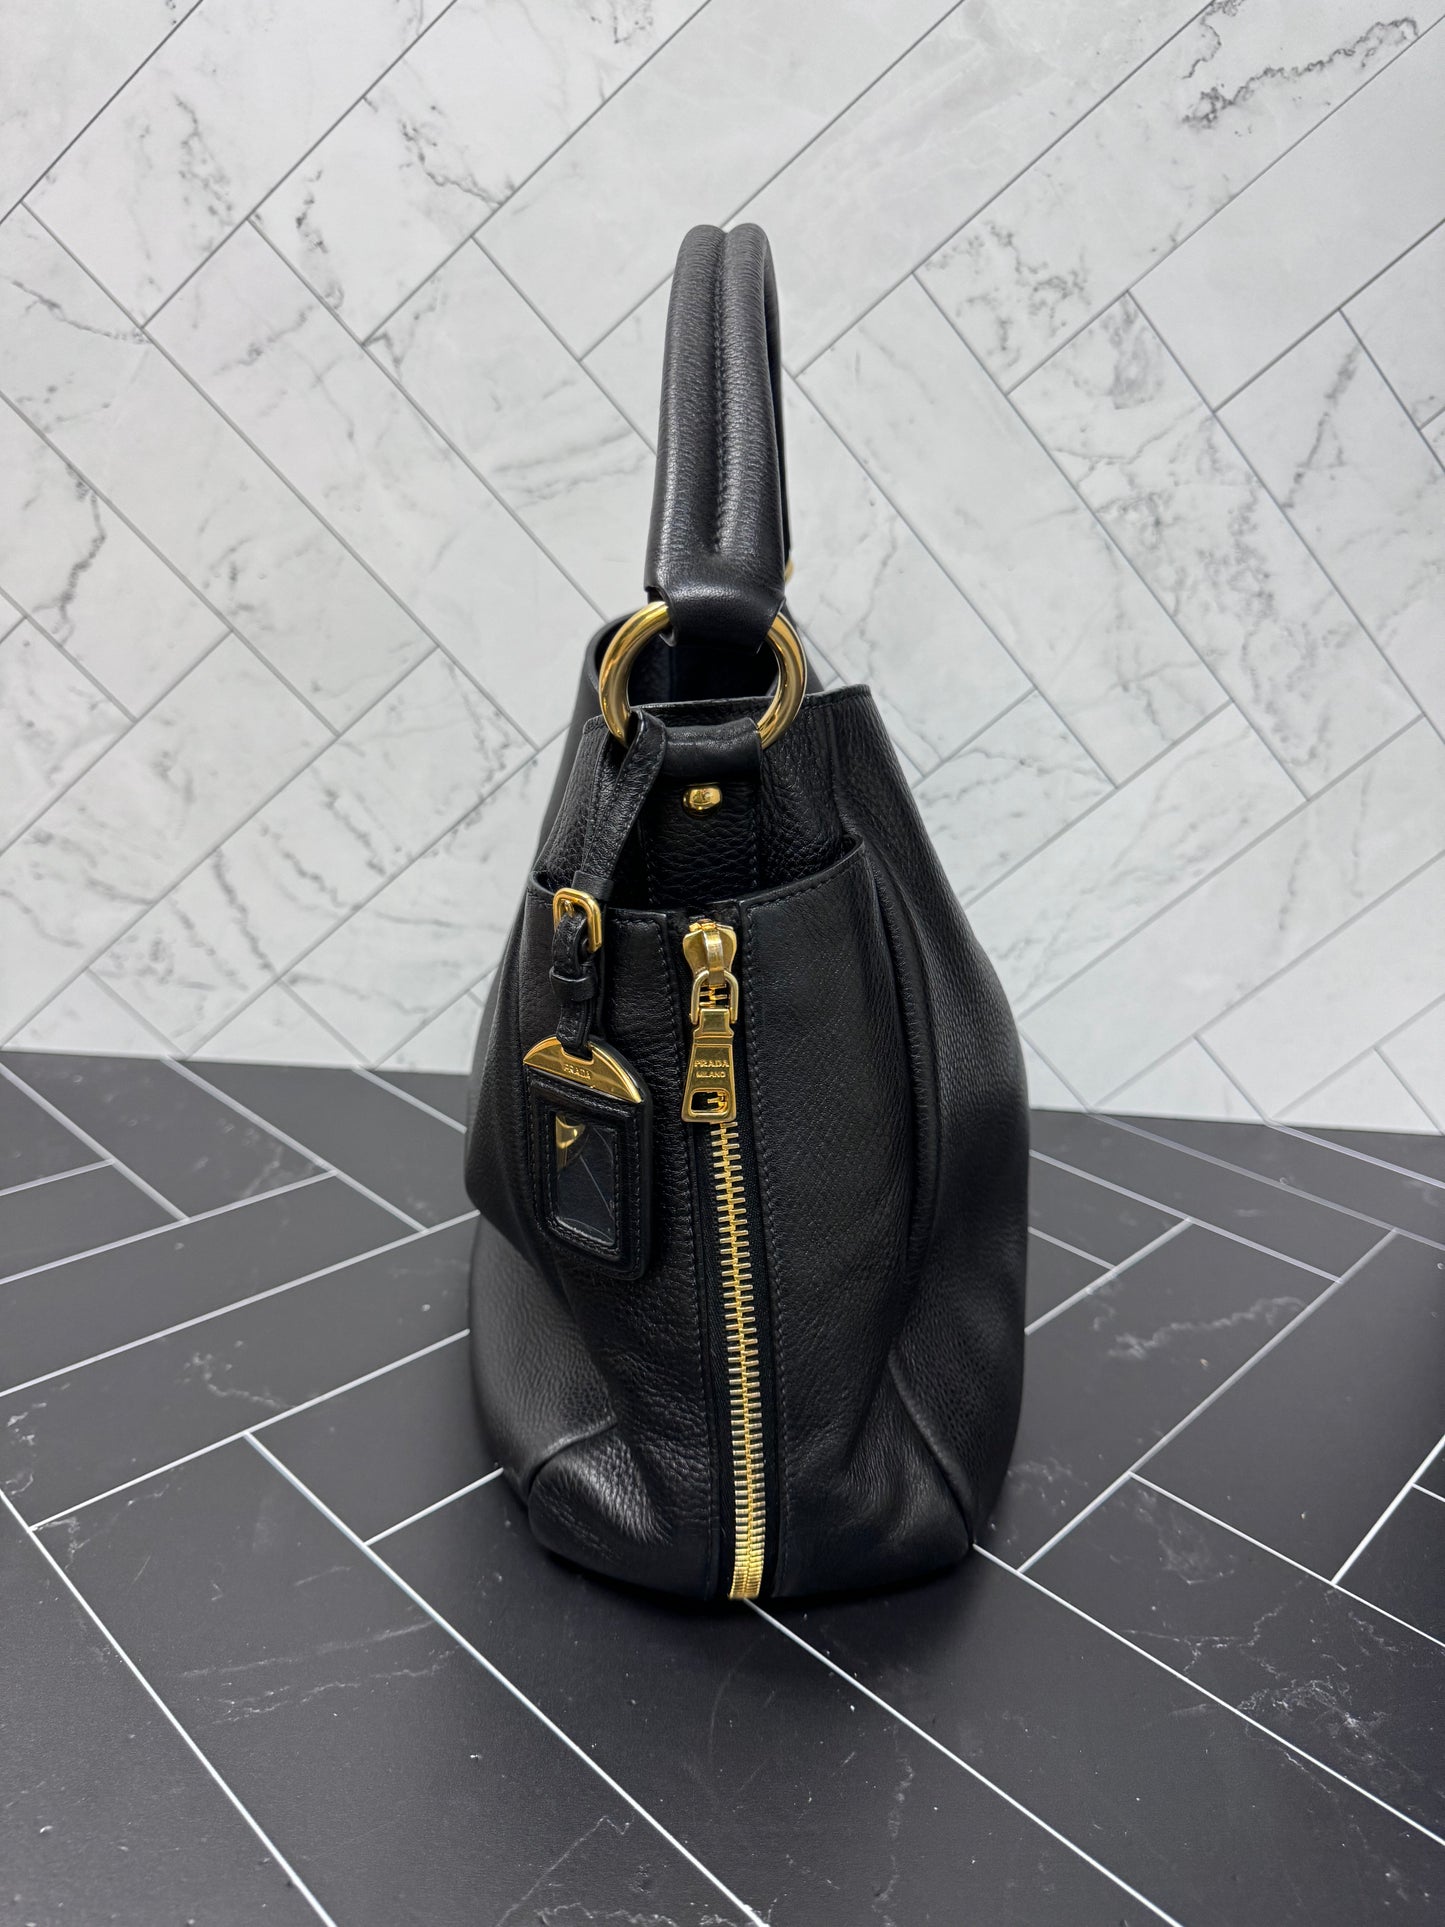 Prada Black Leather Hobo Bag